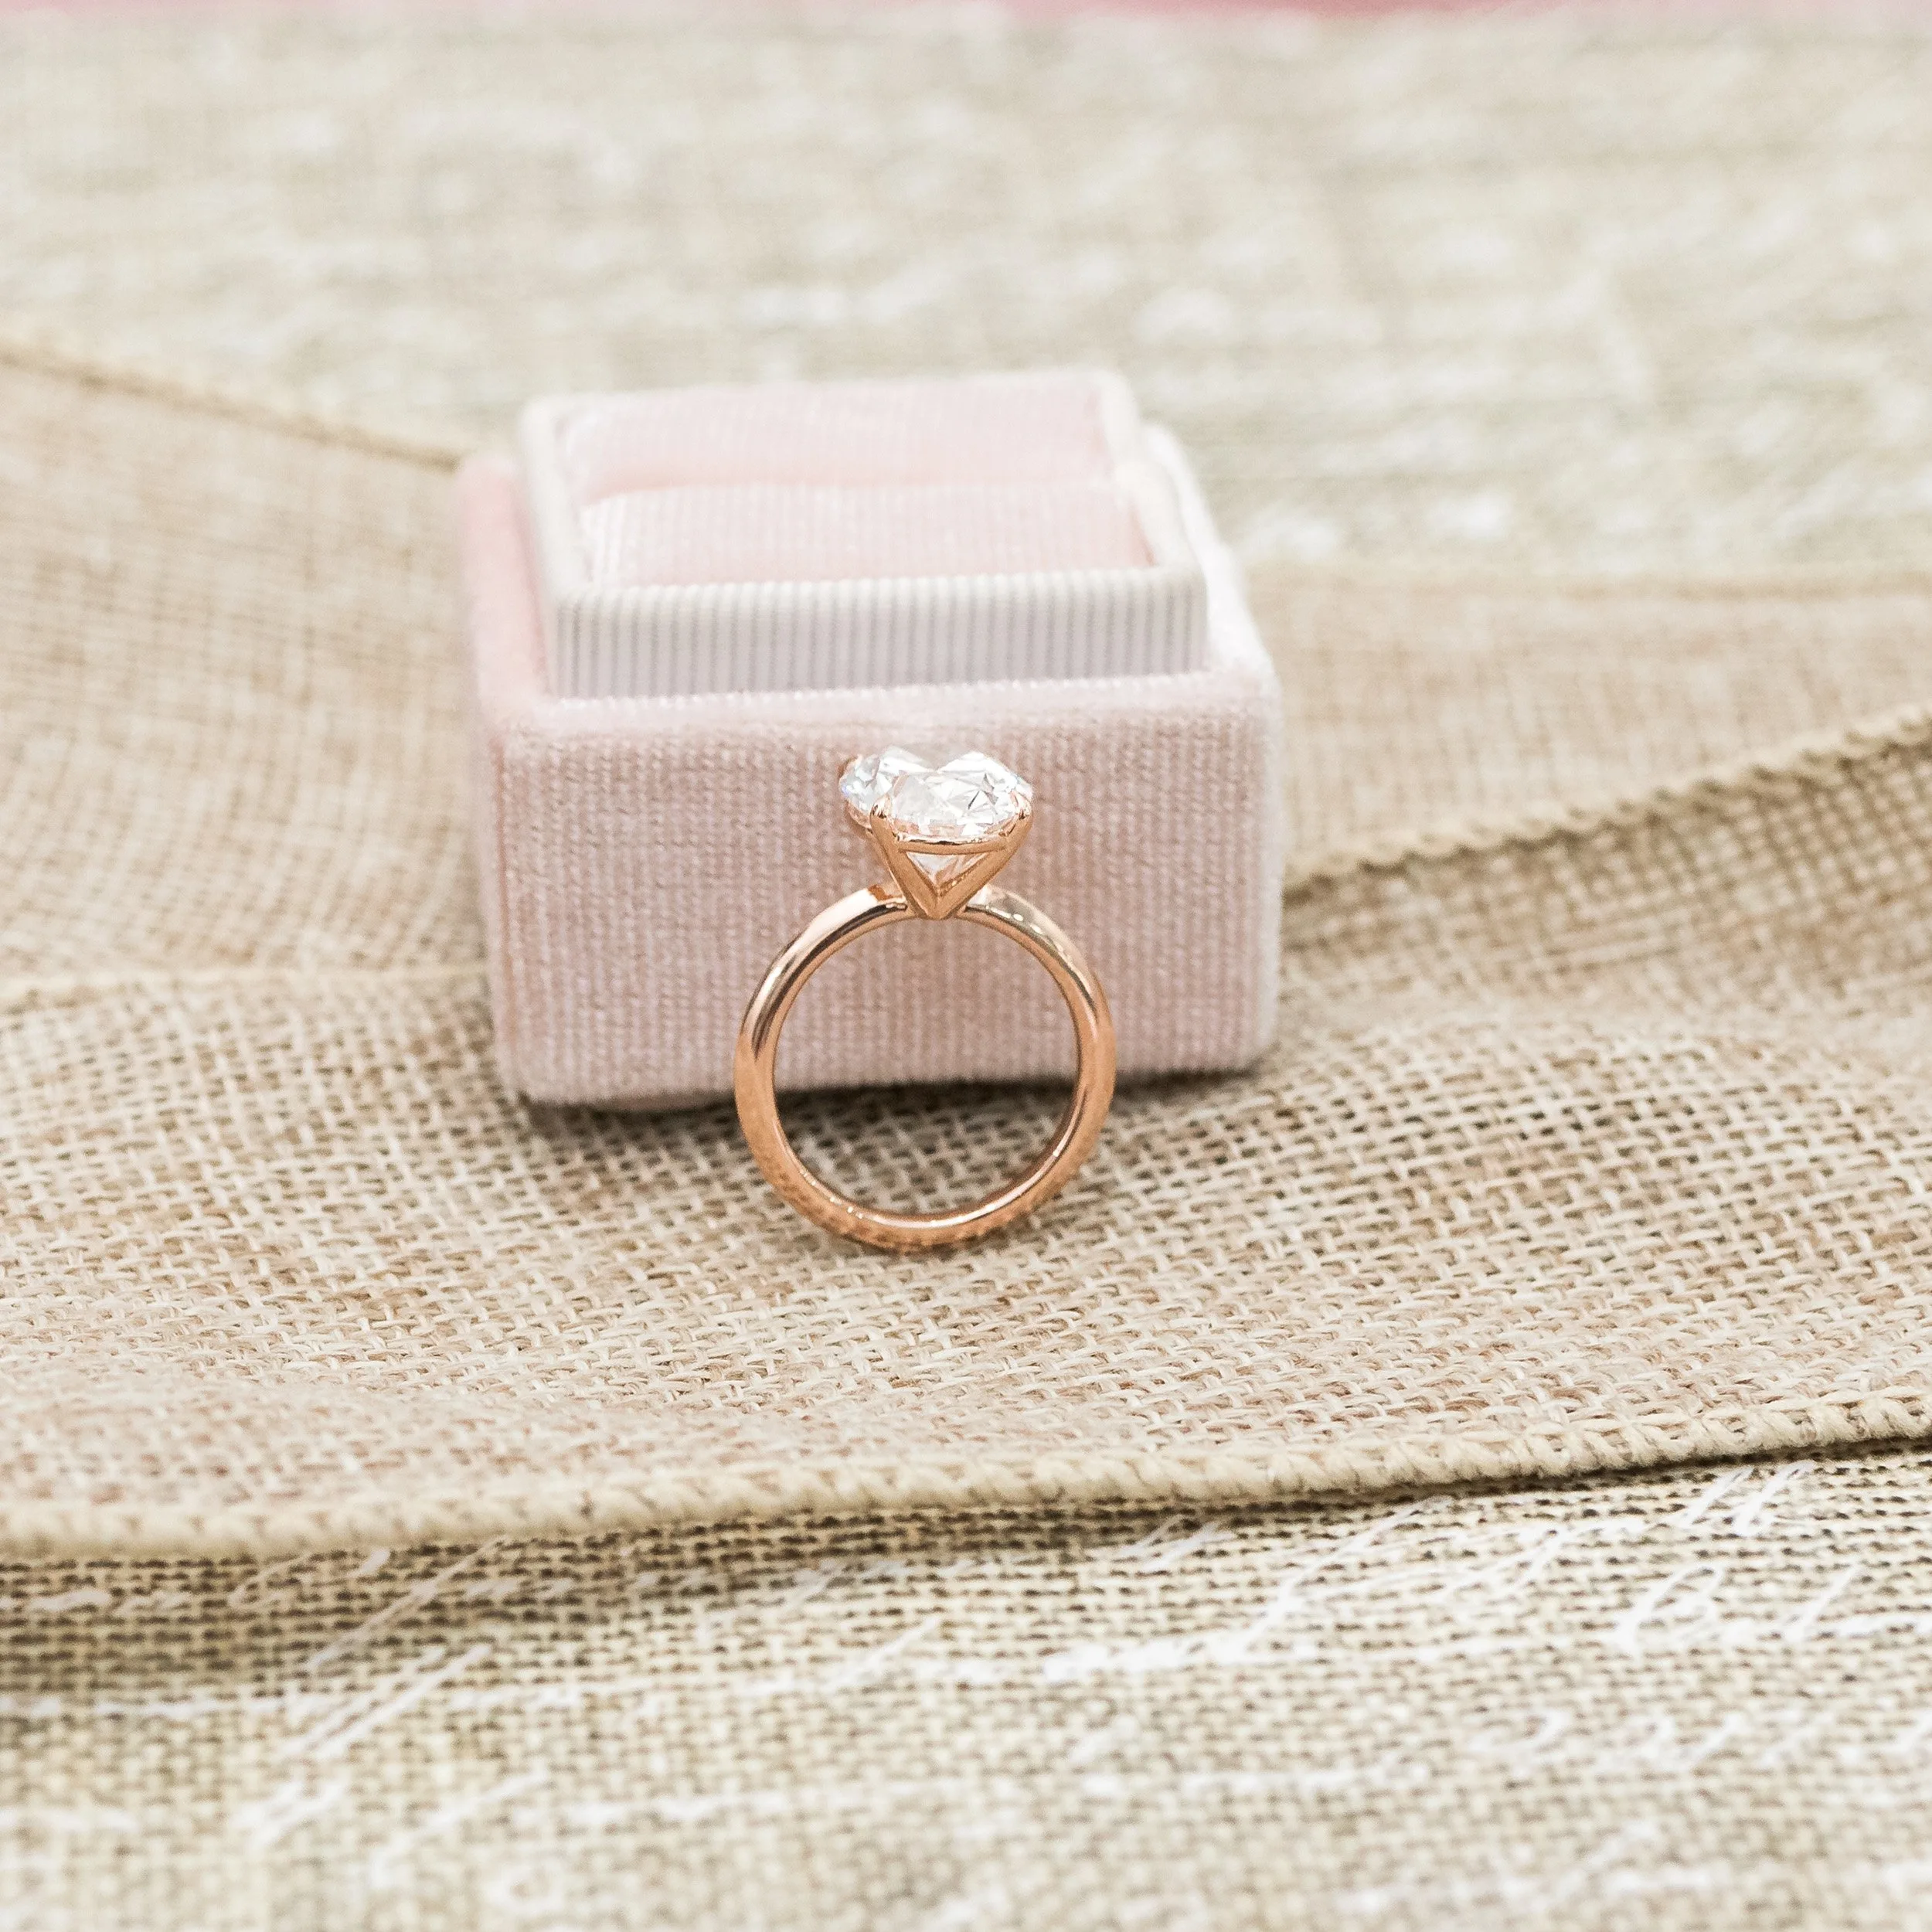 14k rose gold 4.25 carat oval cut lab diamond petite solitaire engagement ring ada diamonds design ad 143 profile